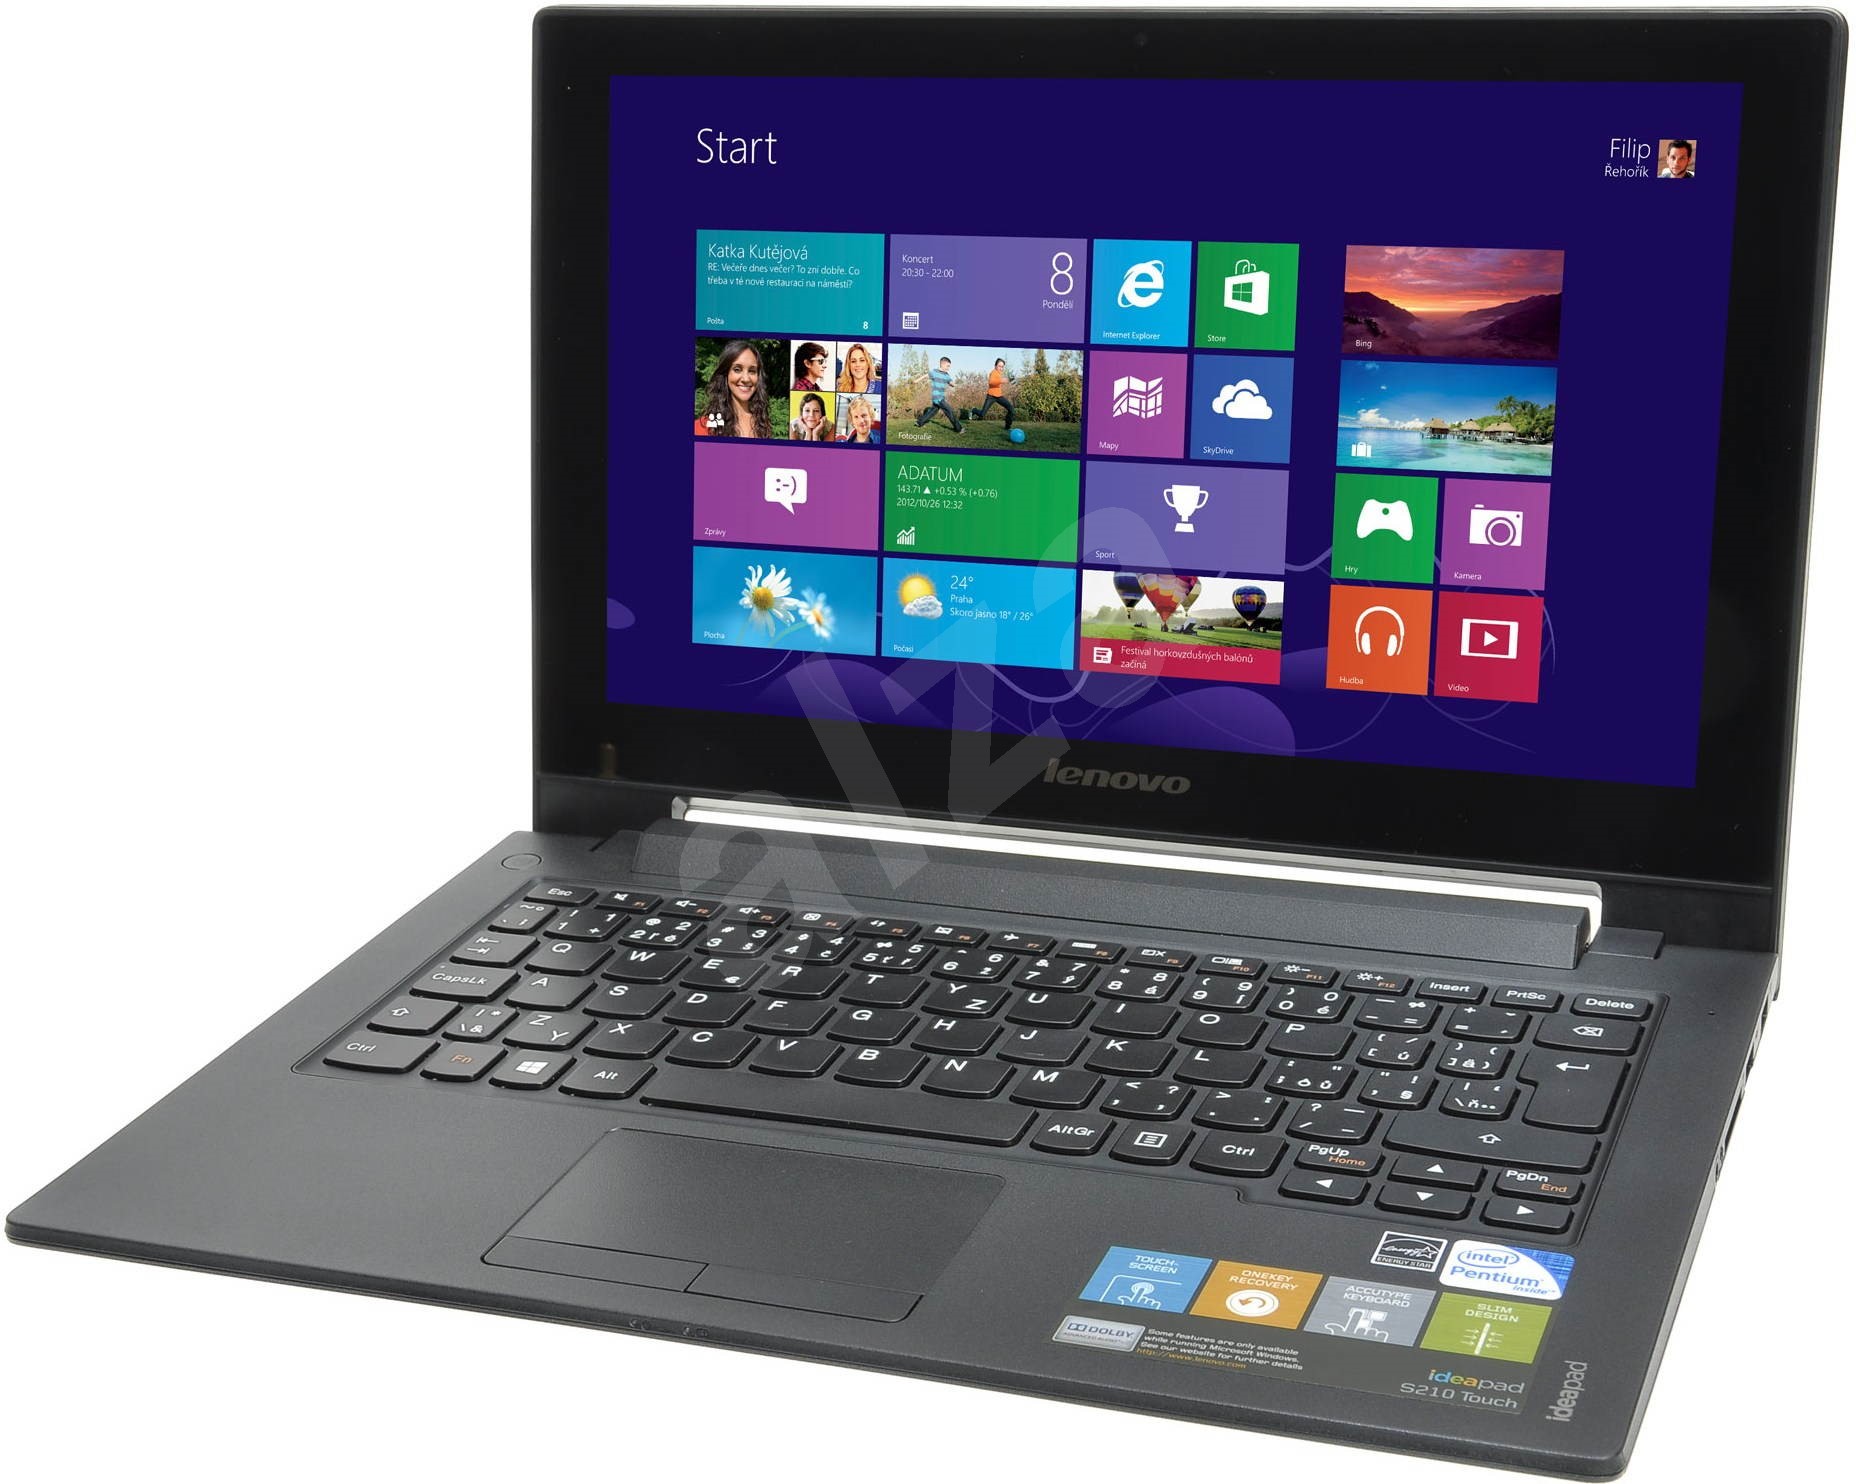 Lenovo Ideapad S210 Touch Notebook0